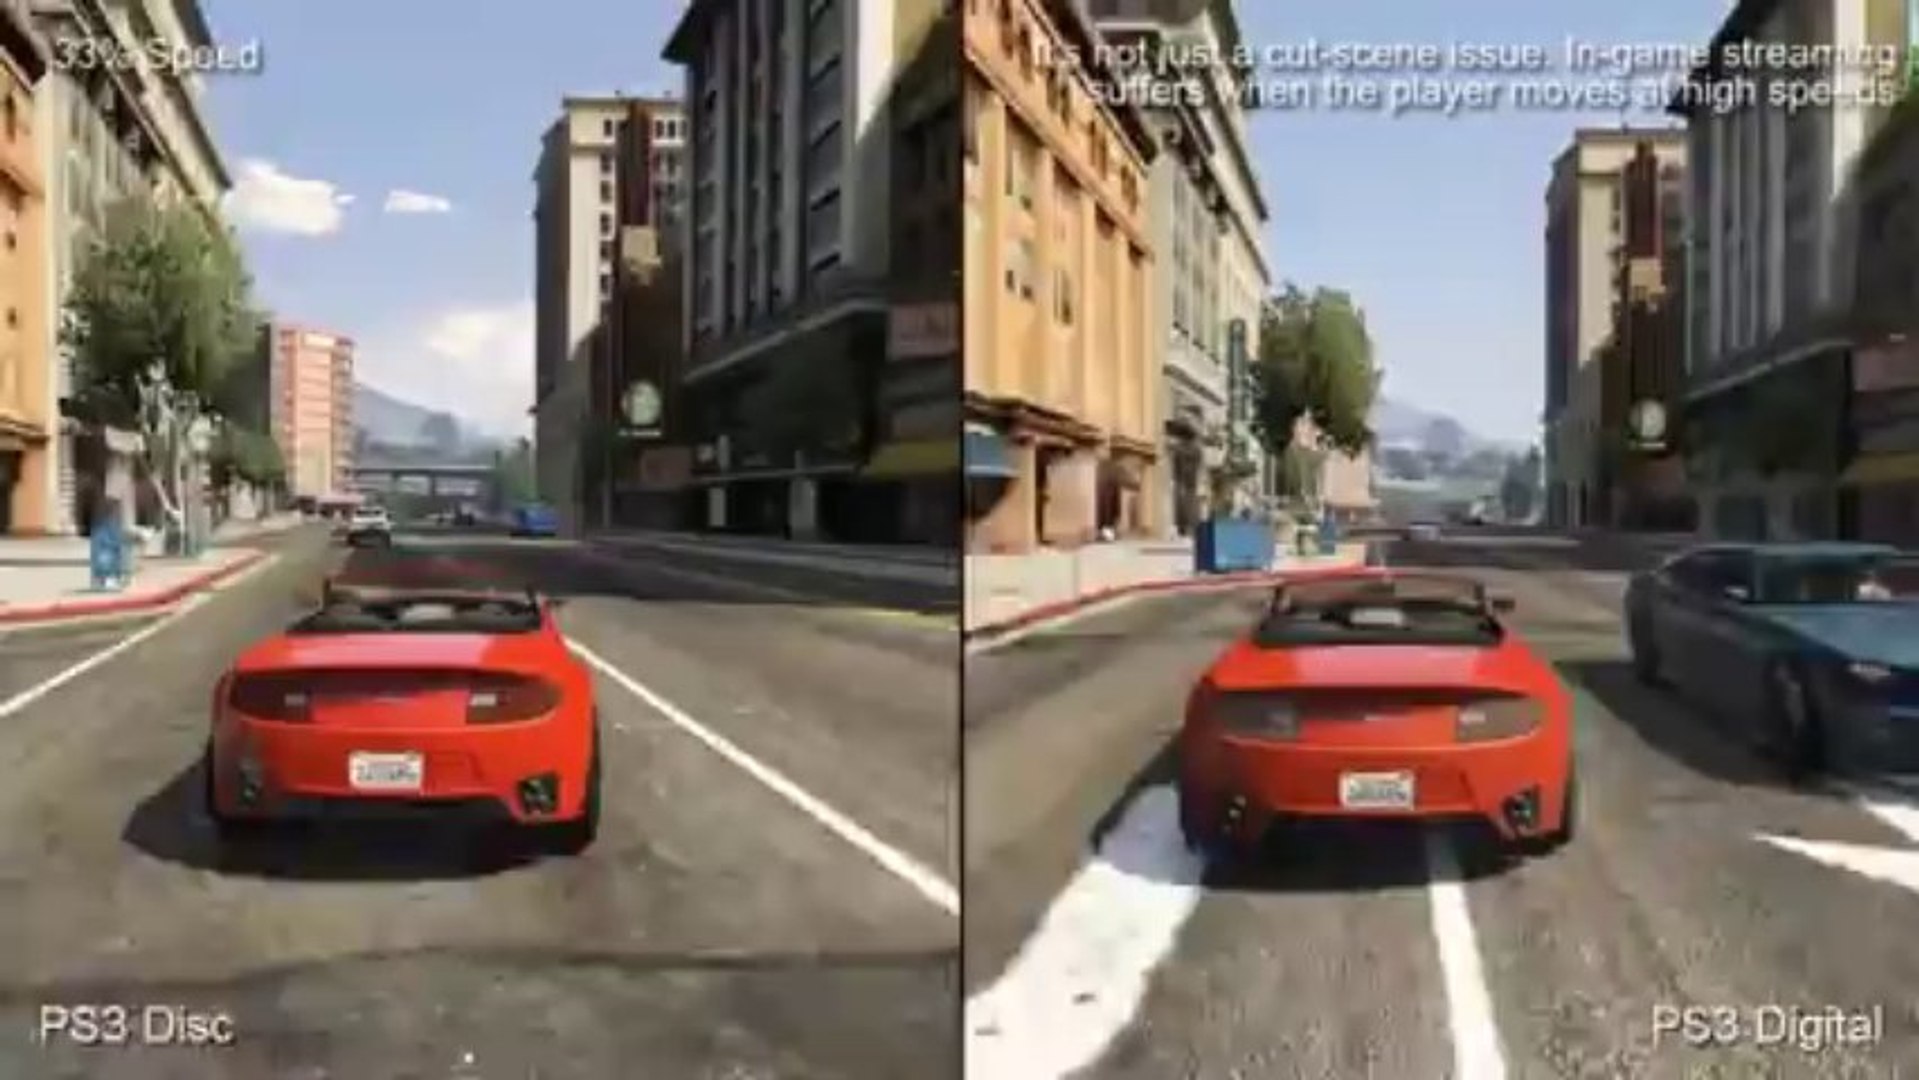 område Bare gør eksekverbar Grand Theft Auto V - Digital PS3 Version VS Disc PS3 Version - video  Dailymotion